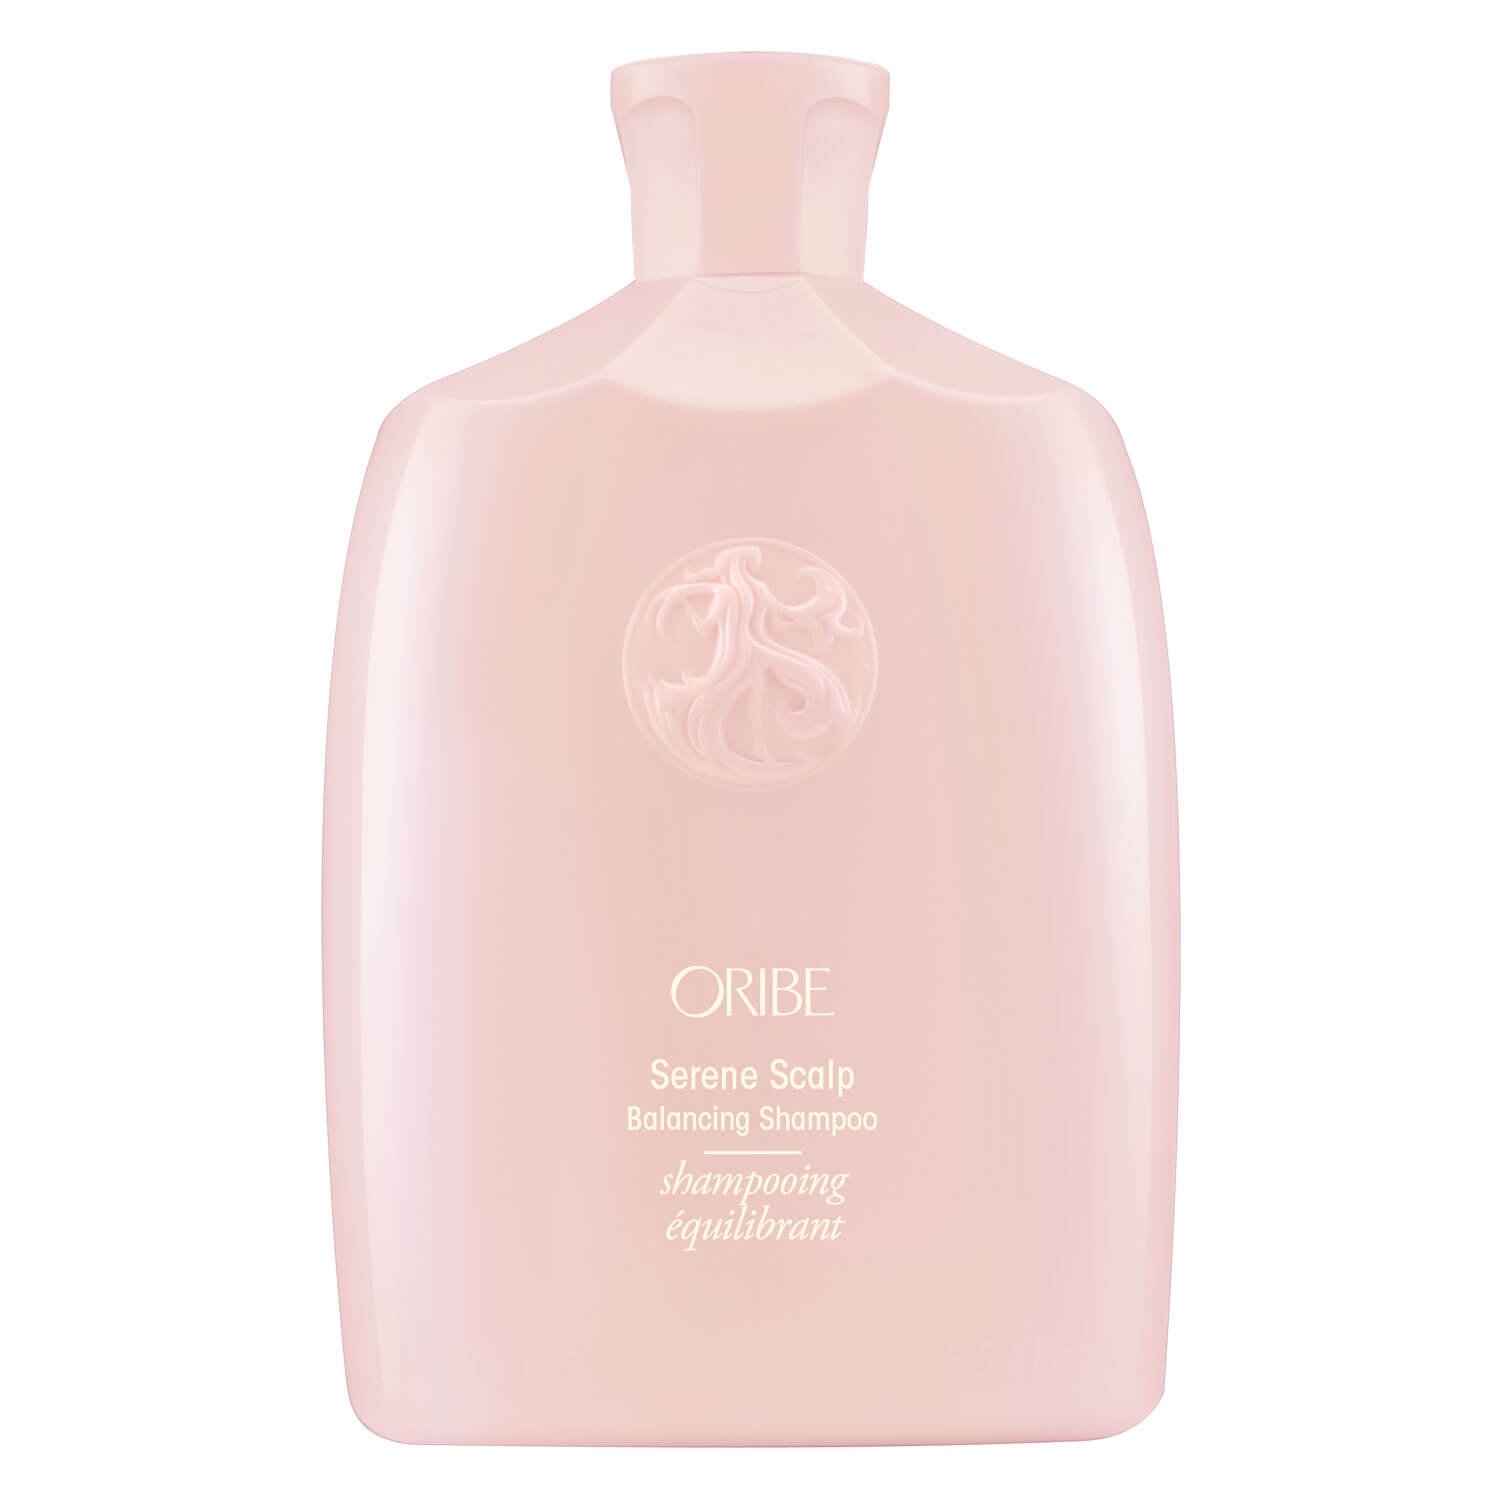 Image du produit de Oribe Care - Serene Scalp Balancing Shampoo